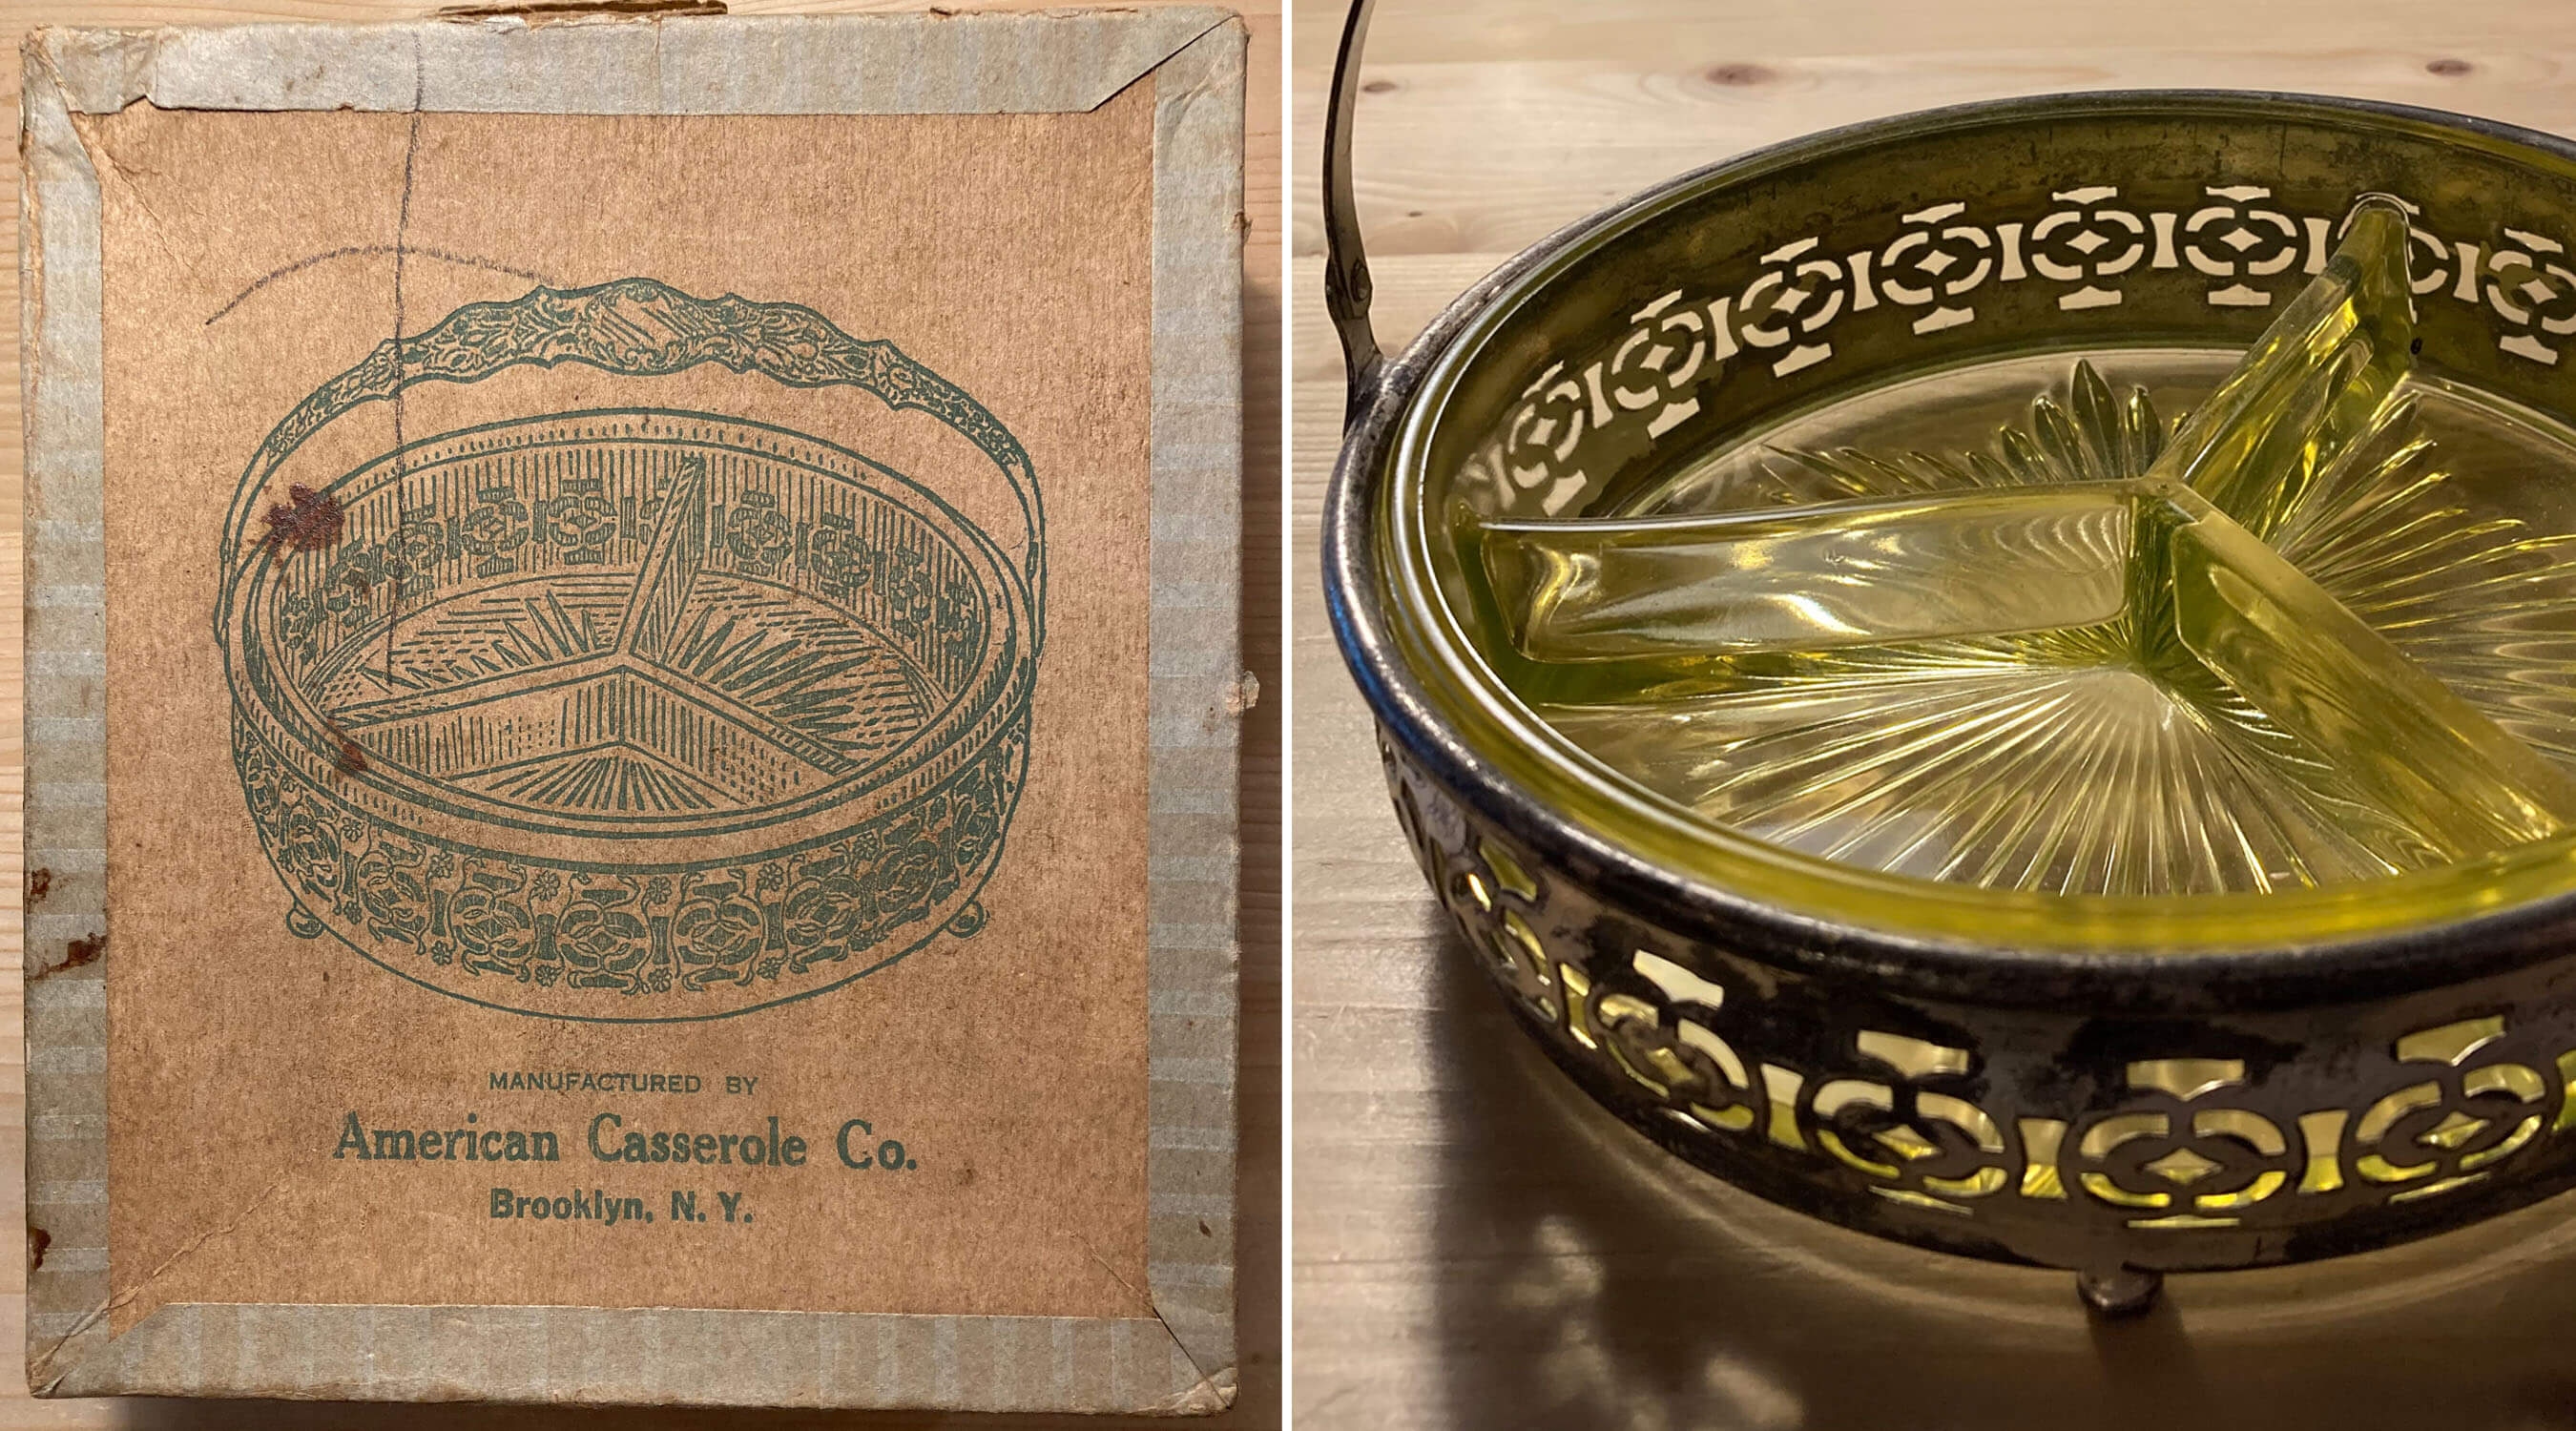 vintage box and casserole dish